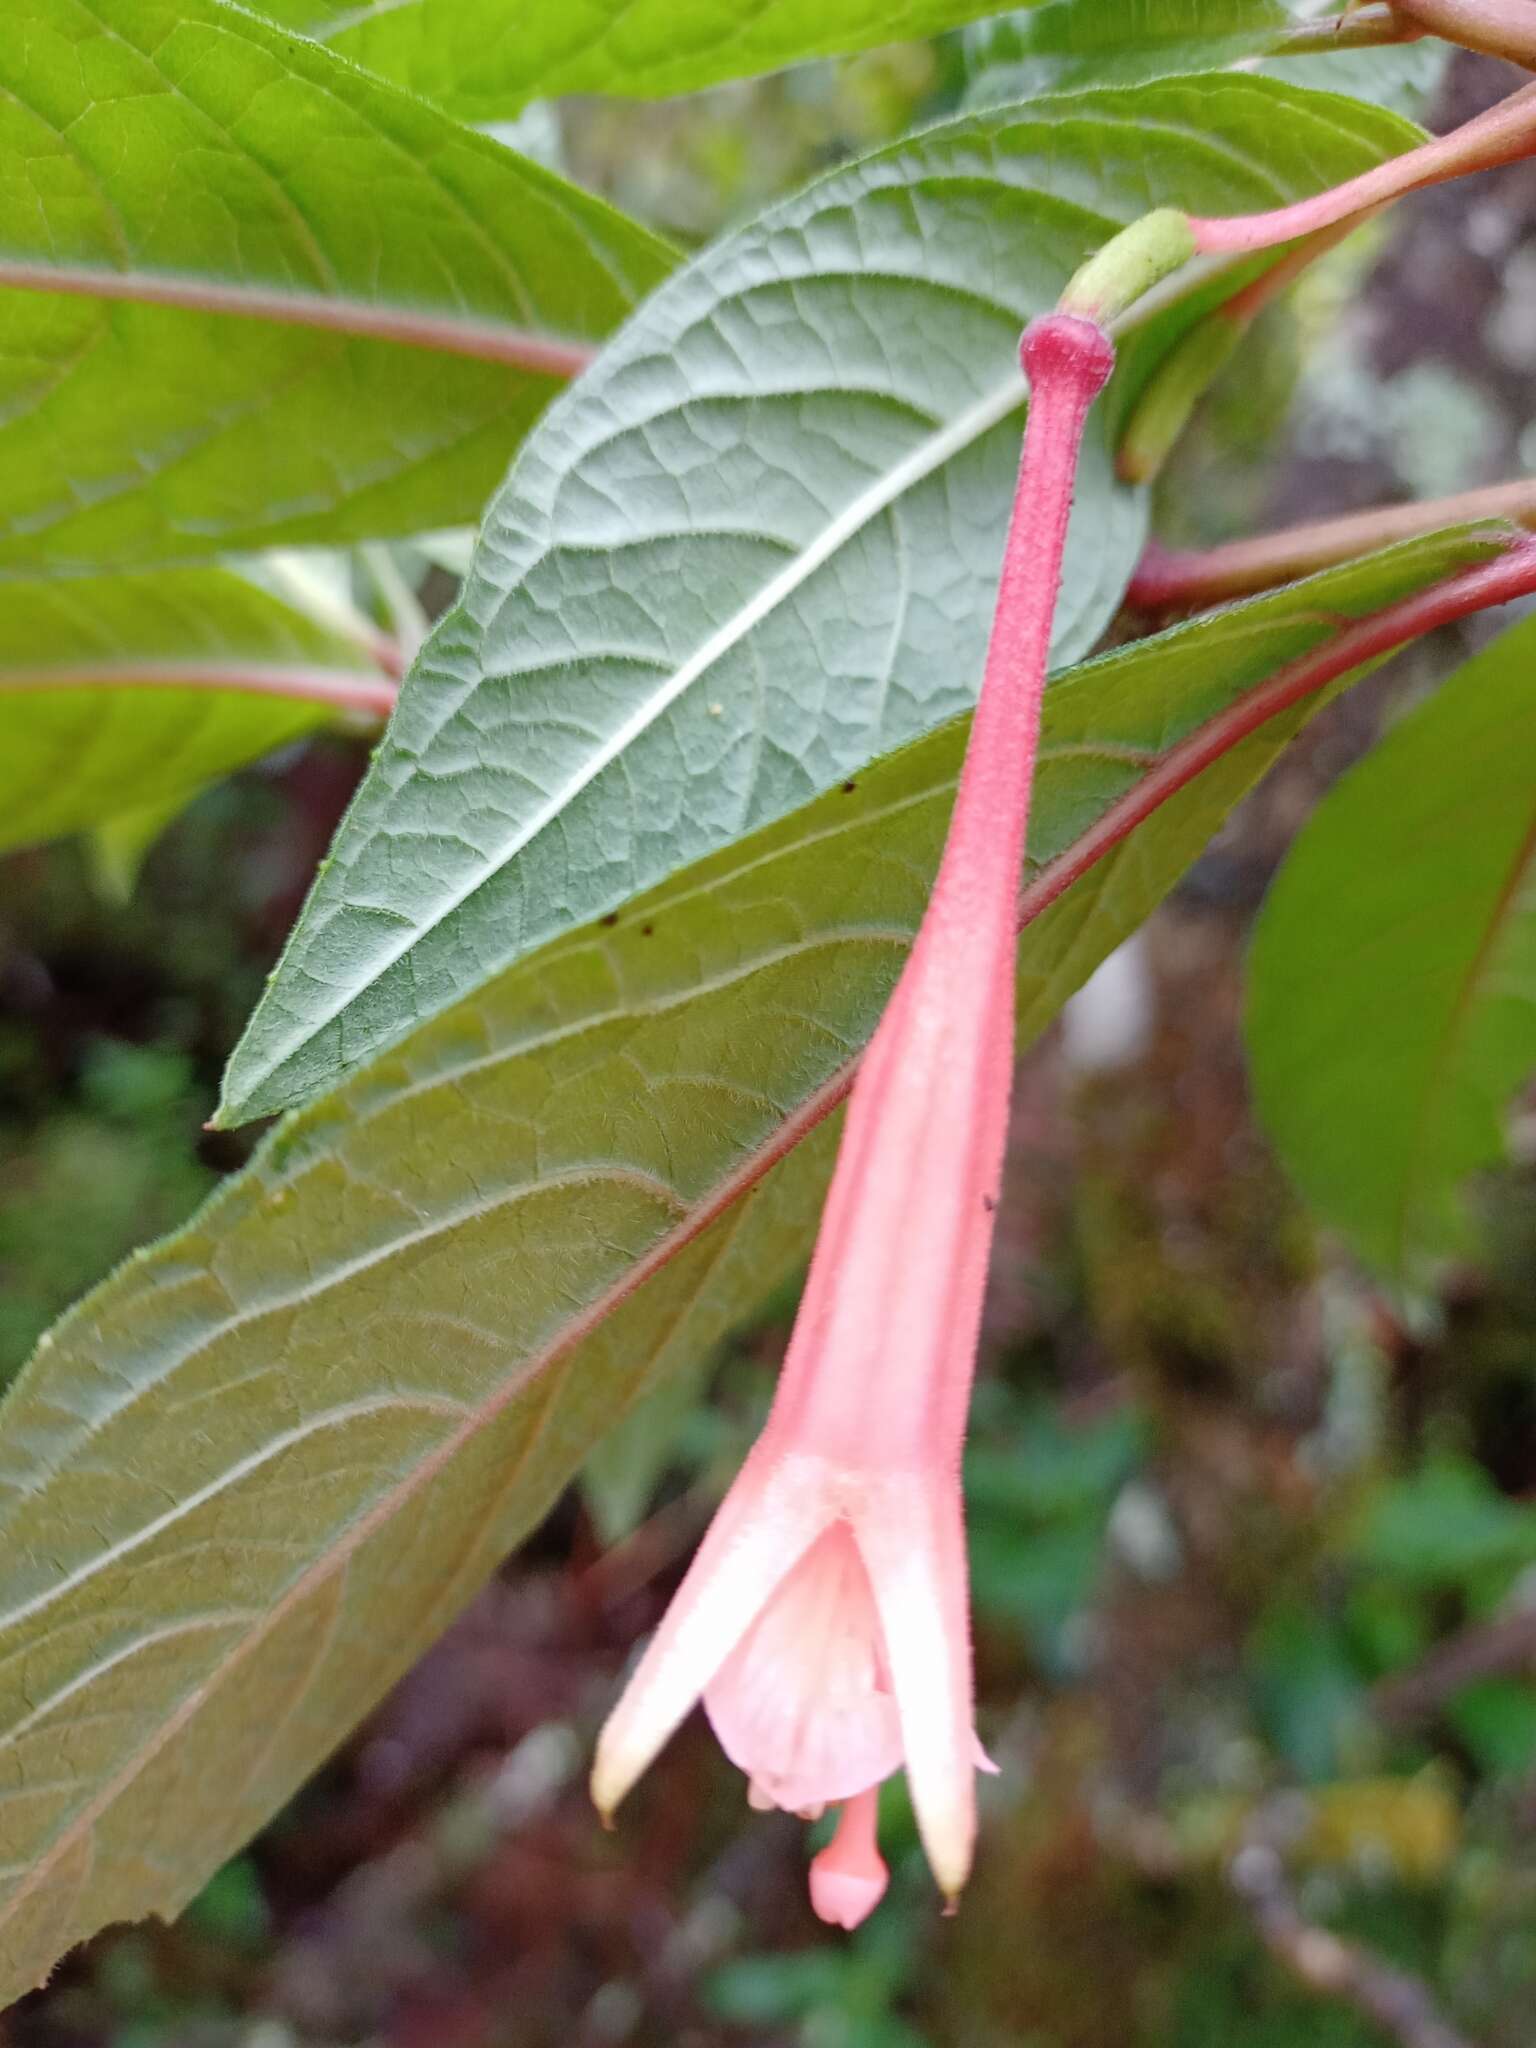 Image of Fuchsia campii P. E. Berry